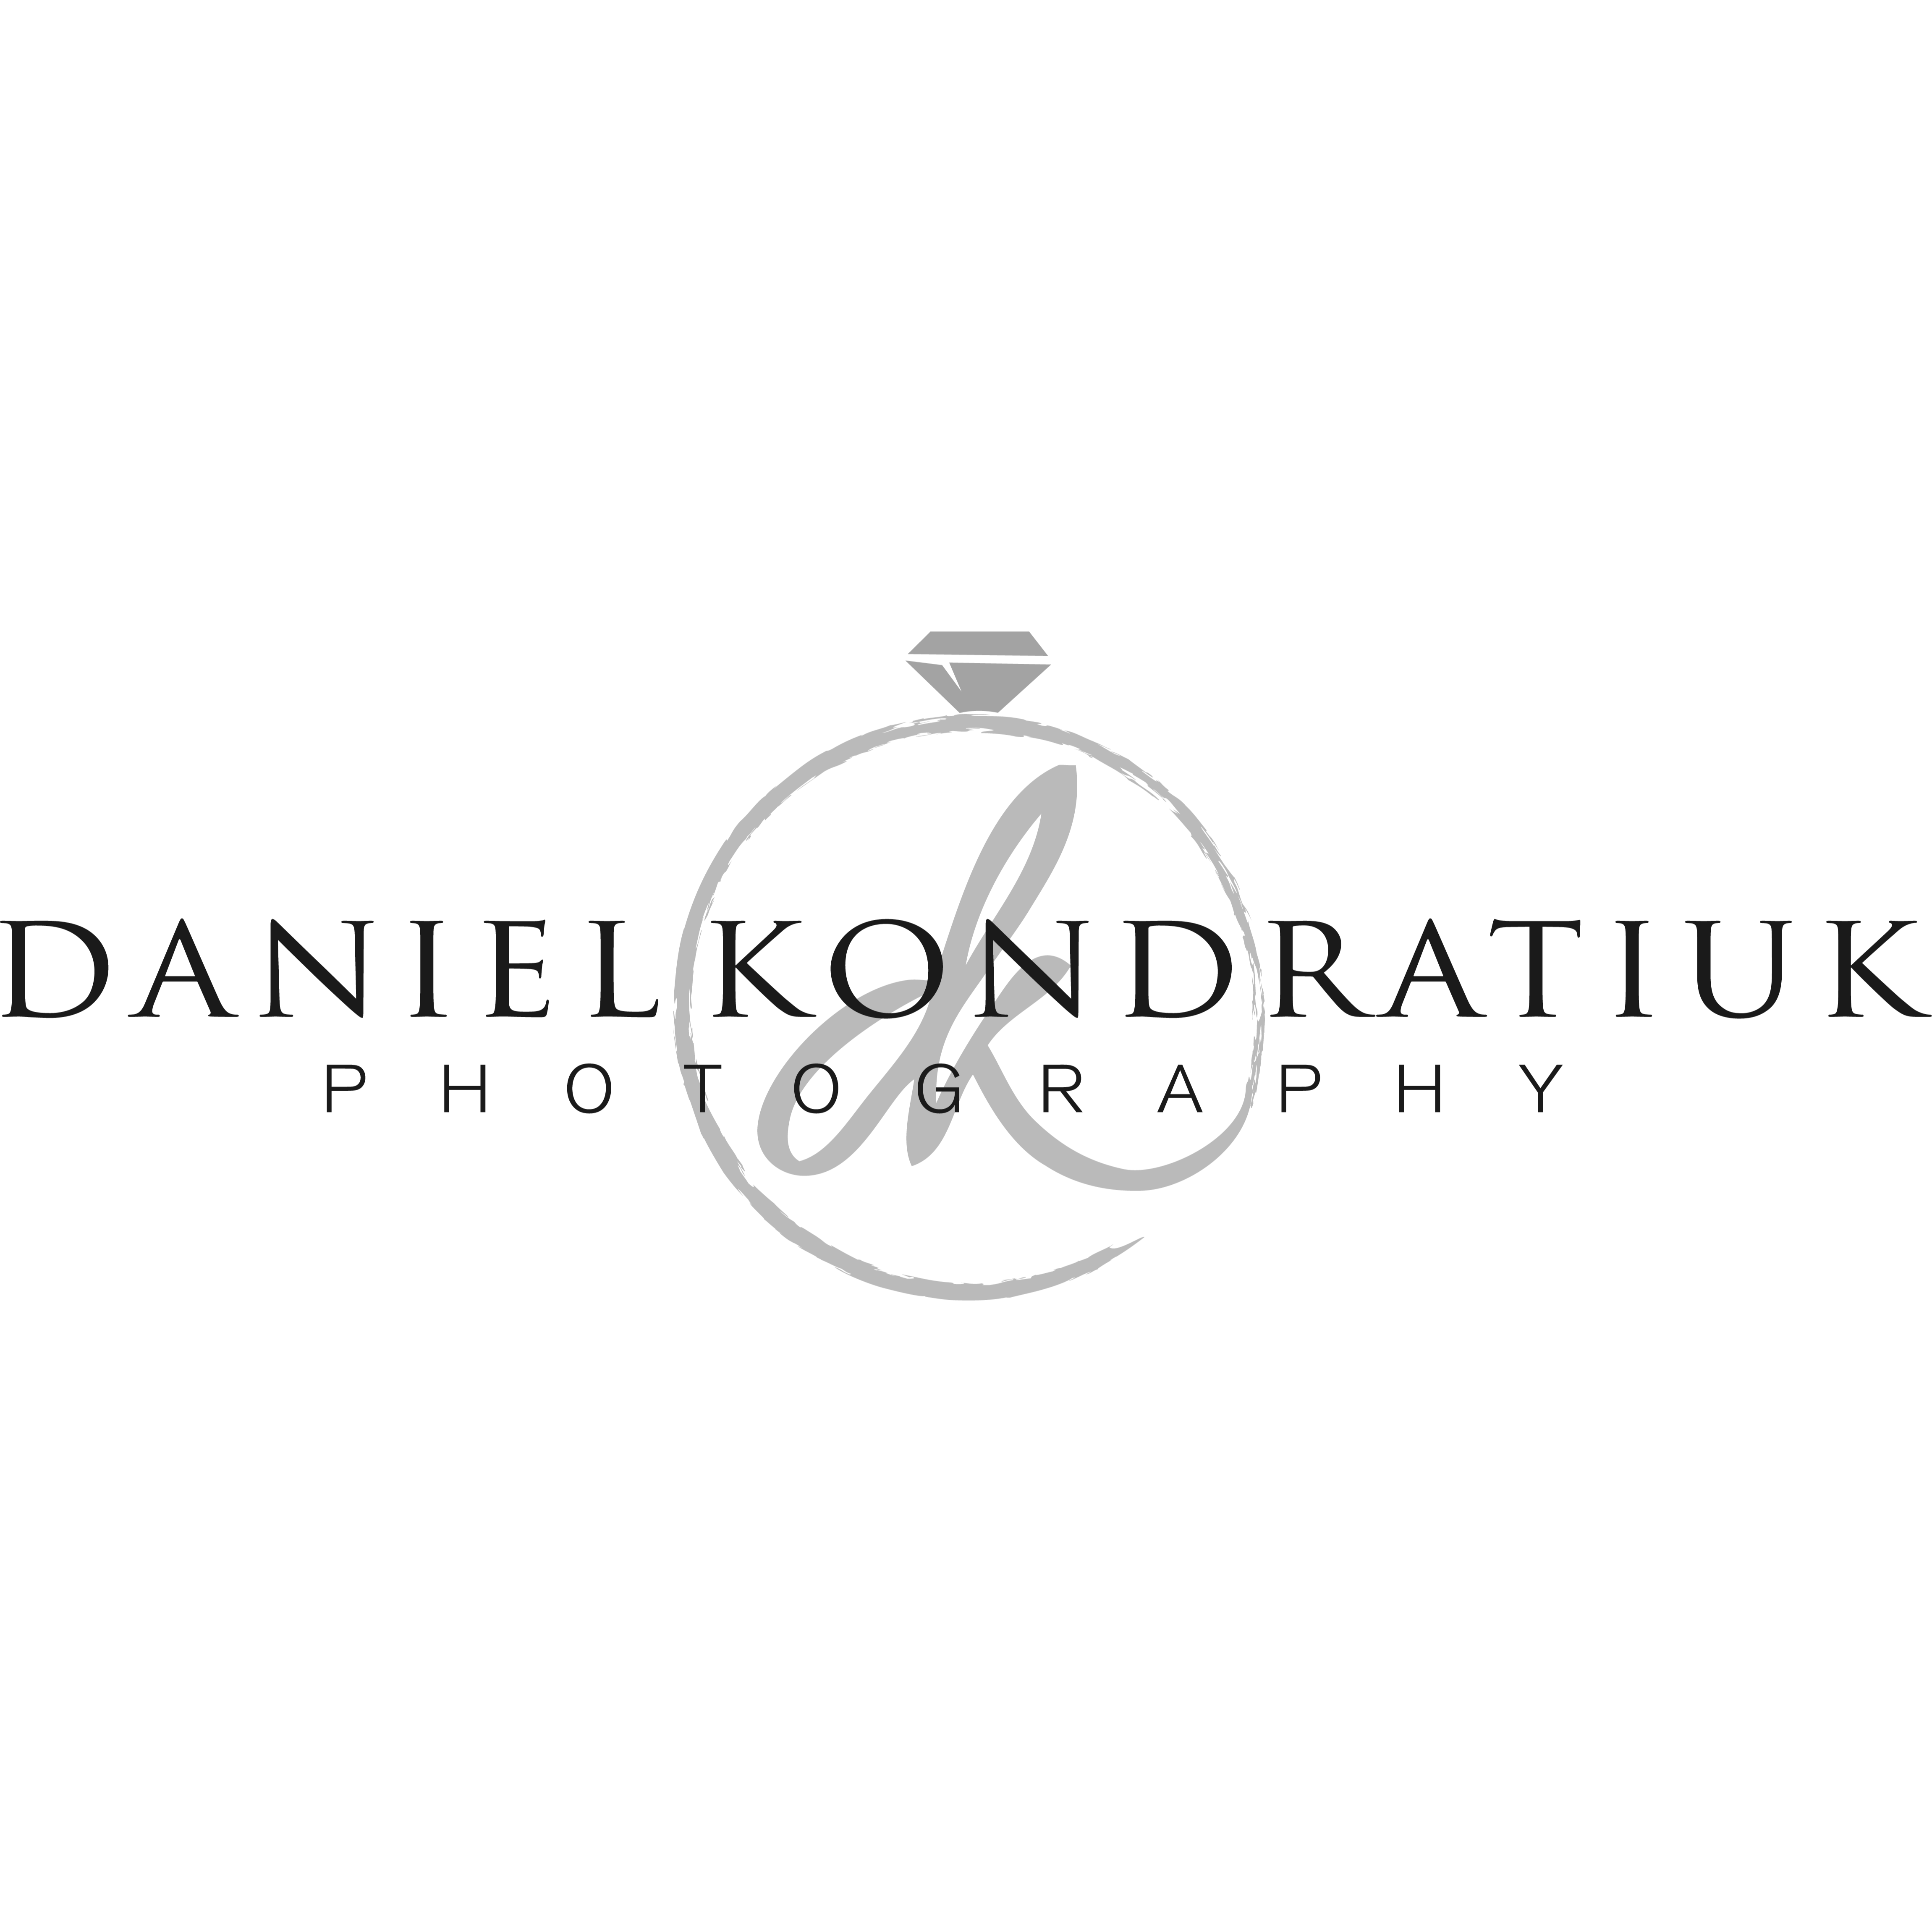 Hochzeitsfotograf Koblenz Daniel Kondratiuk in Koblenz am Rhein - Logo